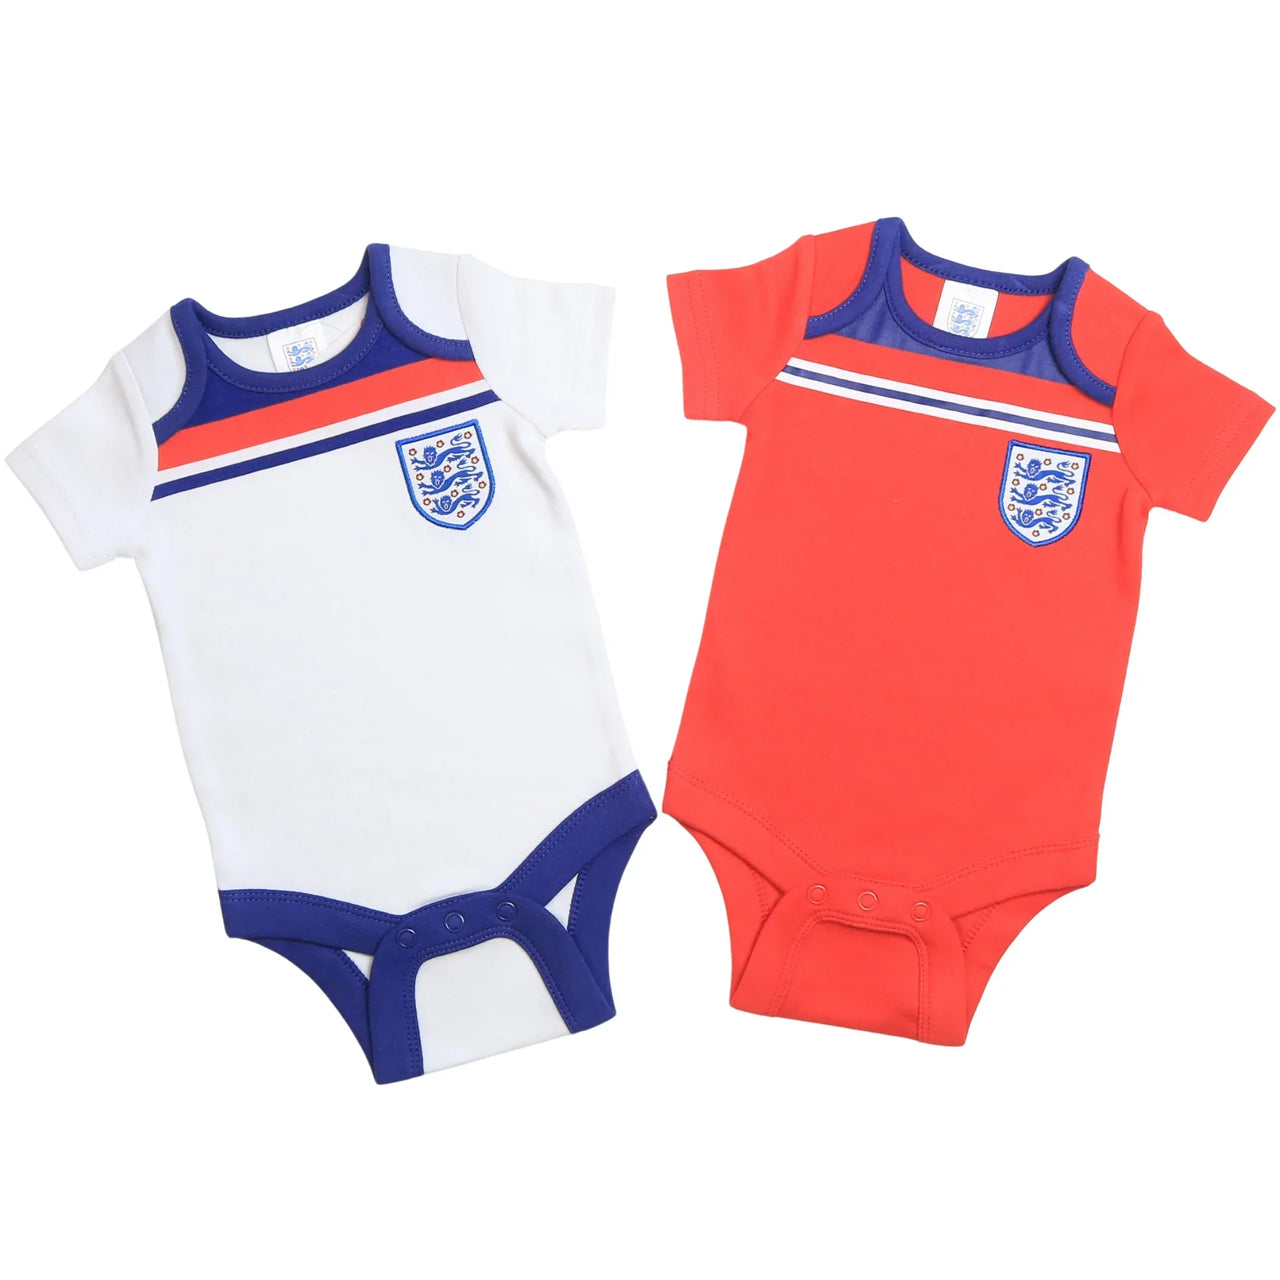 England Football 1982 Retro Baby 2 Pack Bodysuits